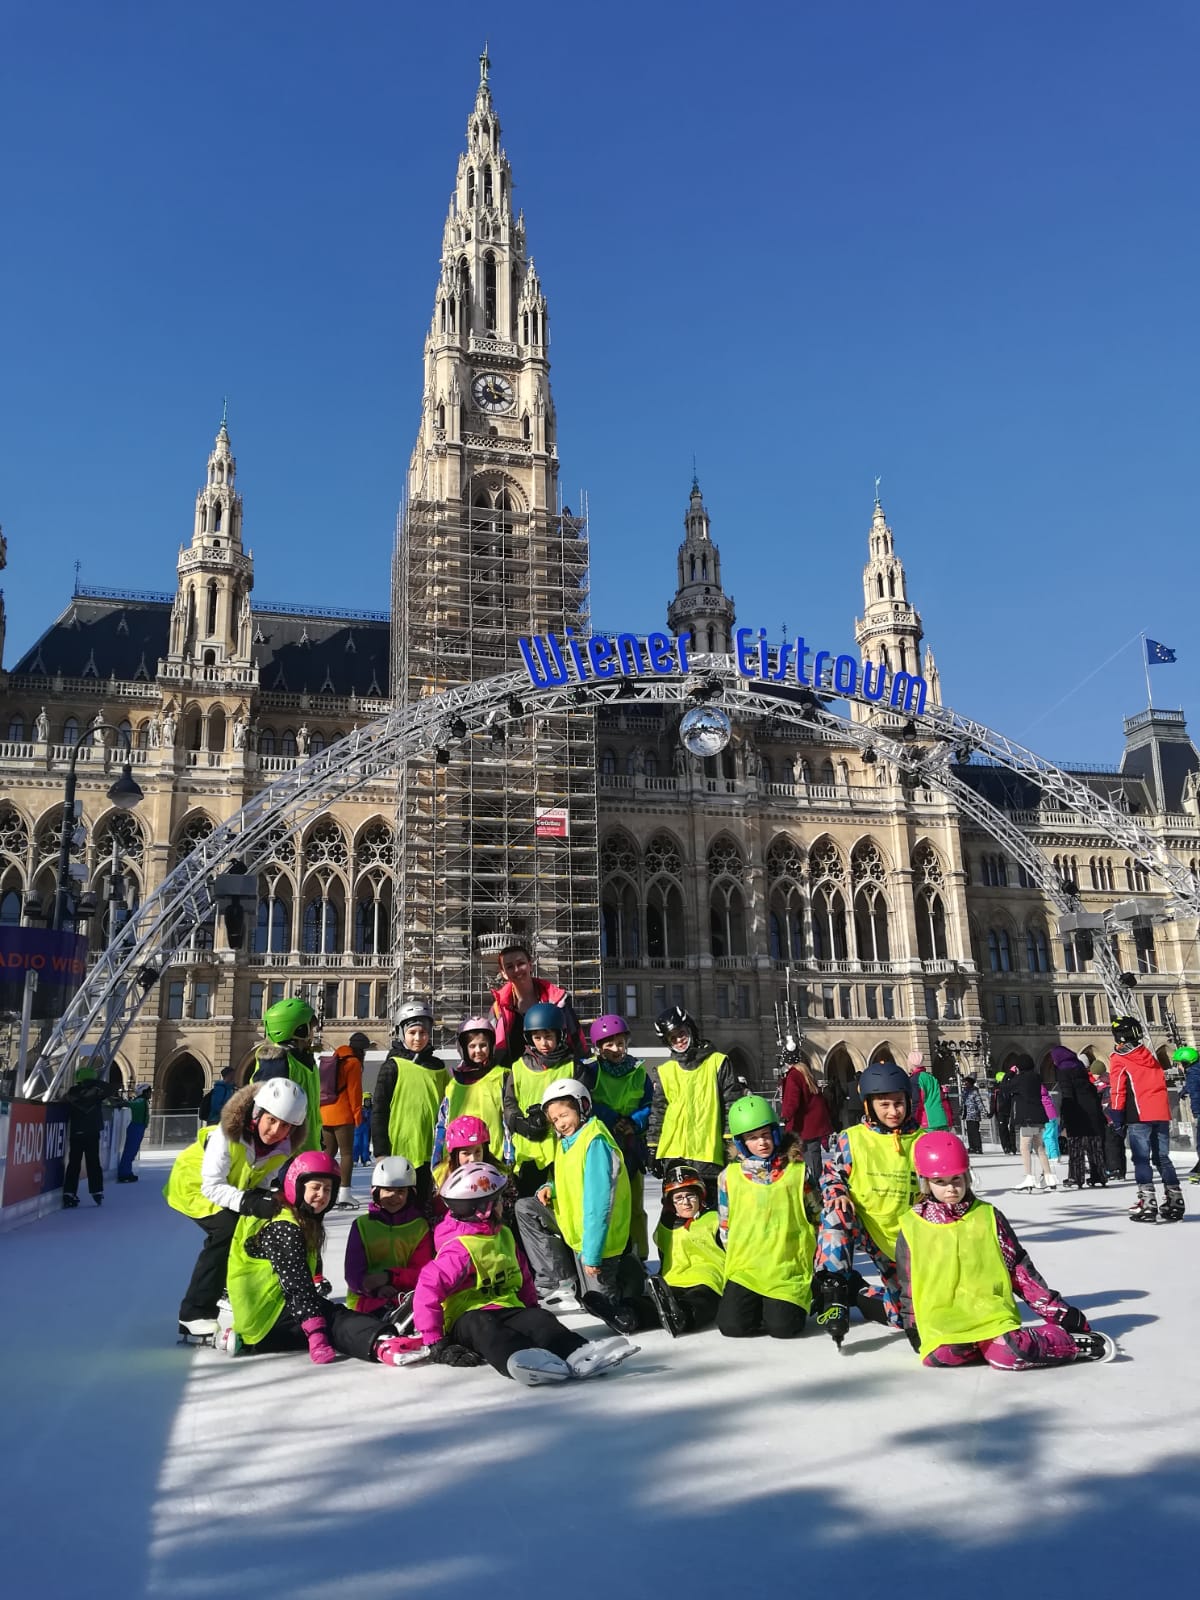 01.04.2019 - Vienna Ice-skating